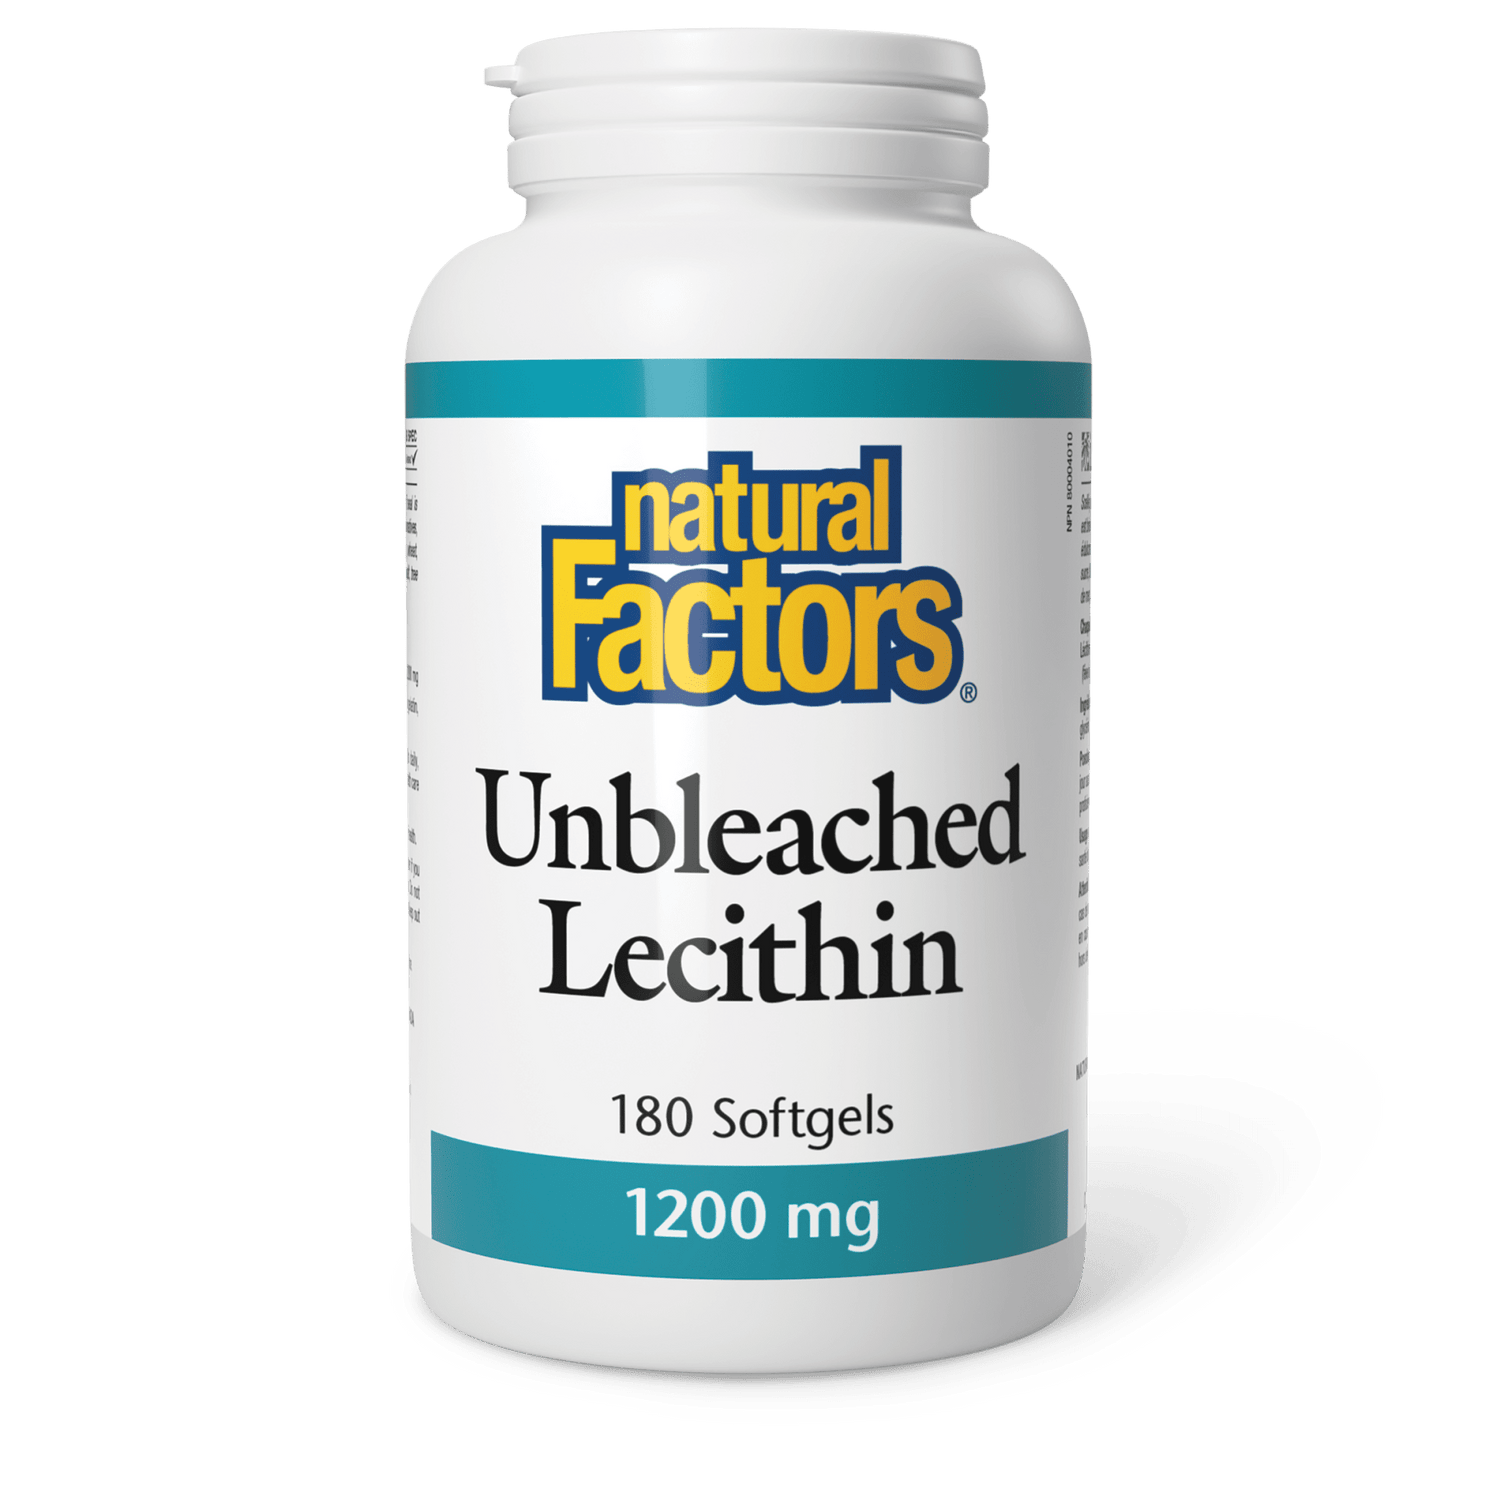 Unbleached Lecithin 1200 mg, Natural Factors|v|image|2601